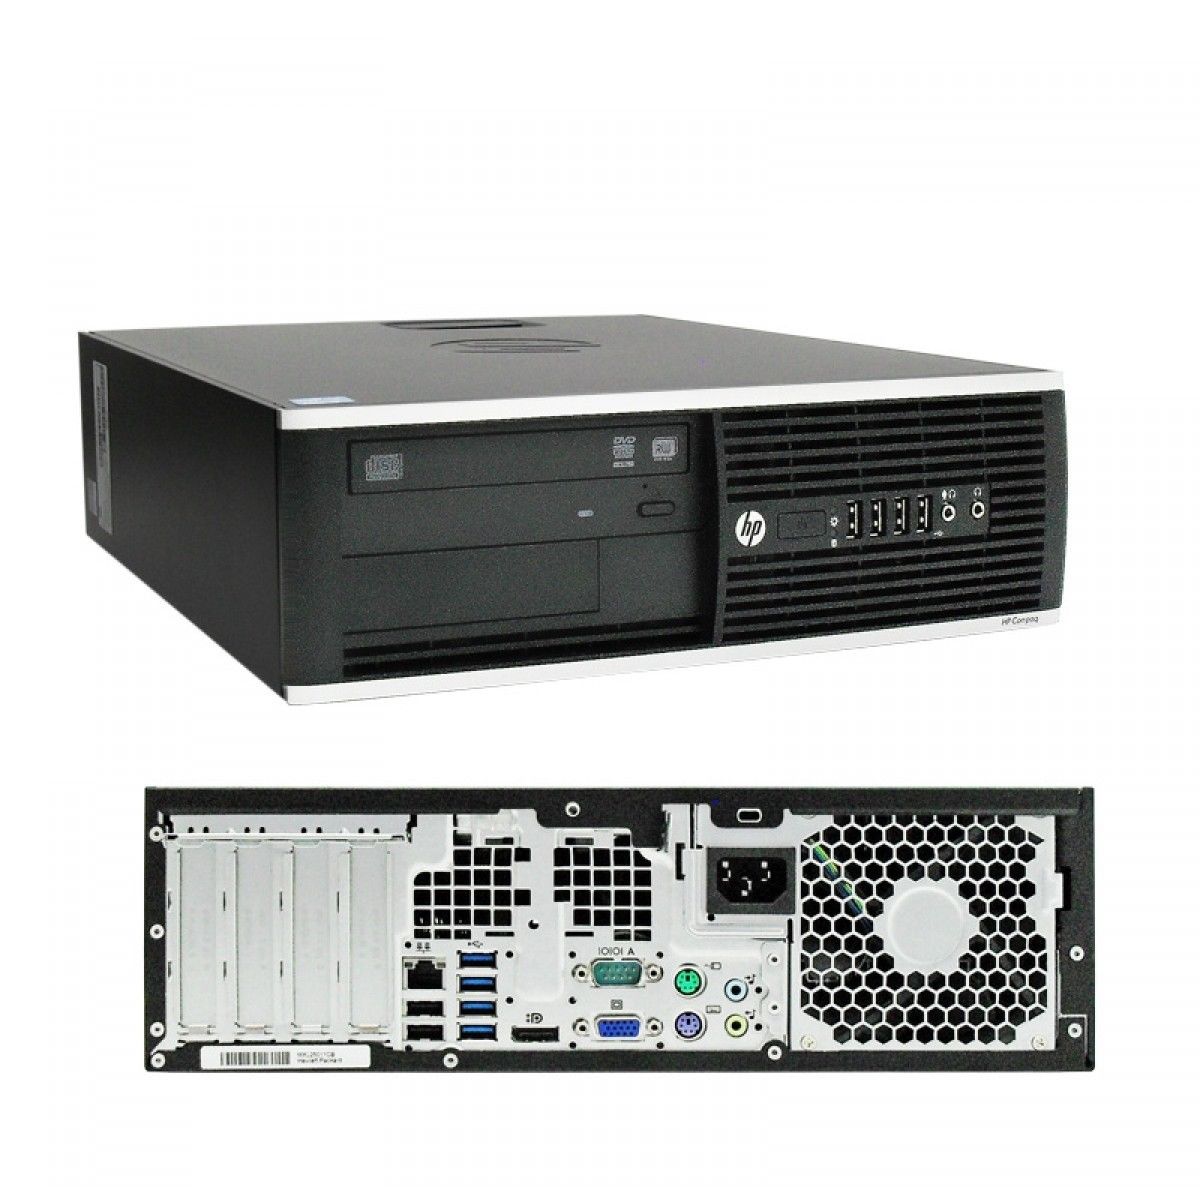 HP Compaq 8000 Elite Pro SFF Desktop Computer Core 2 Duo 3.0 GHz 4